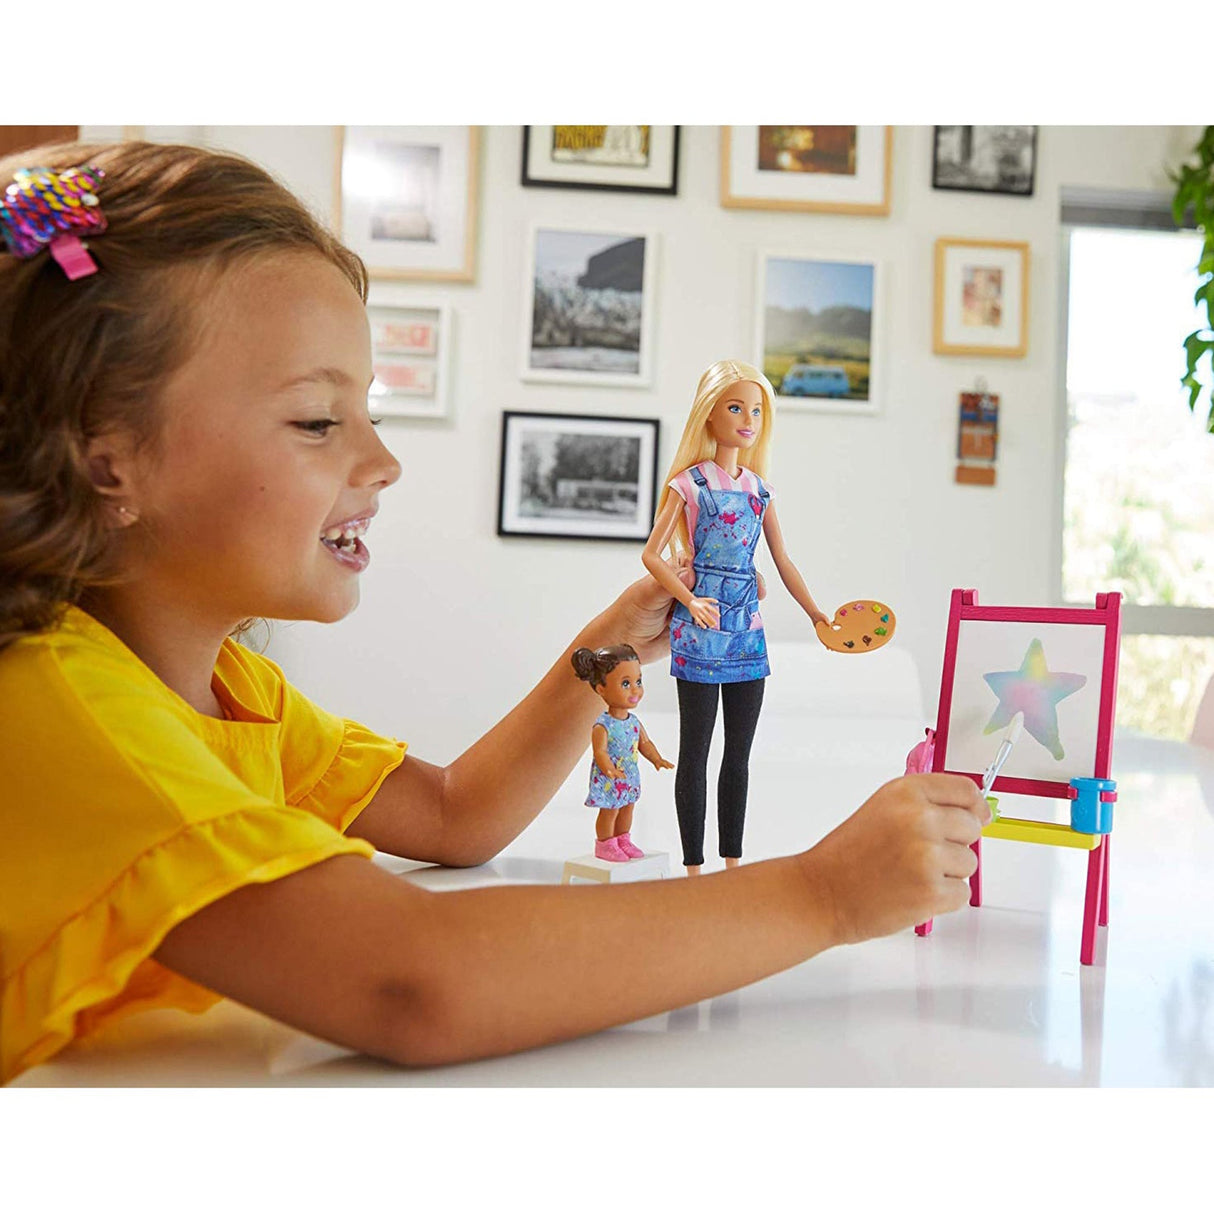 Barbie Careers - Art Teacher Playset